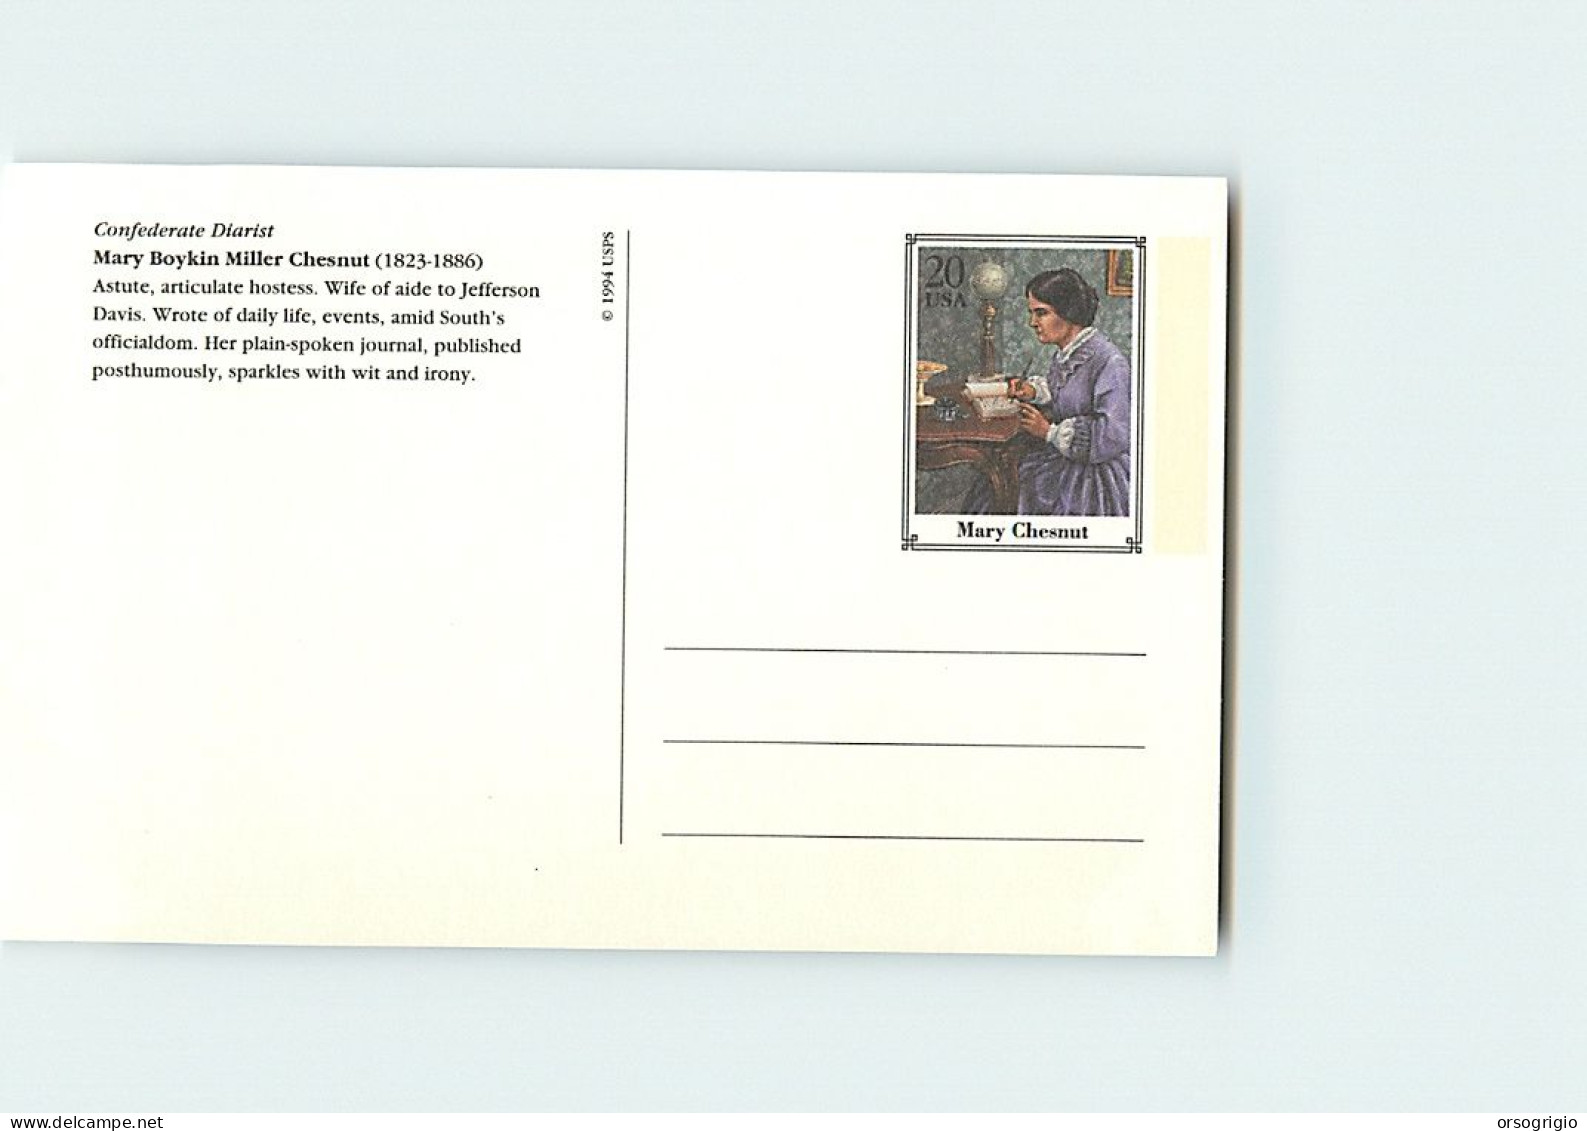 USA - cartolina intero postale - INDIPENDENZA STATI UNITI D'AMERICA -  N° 20 cards